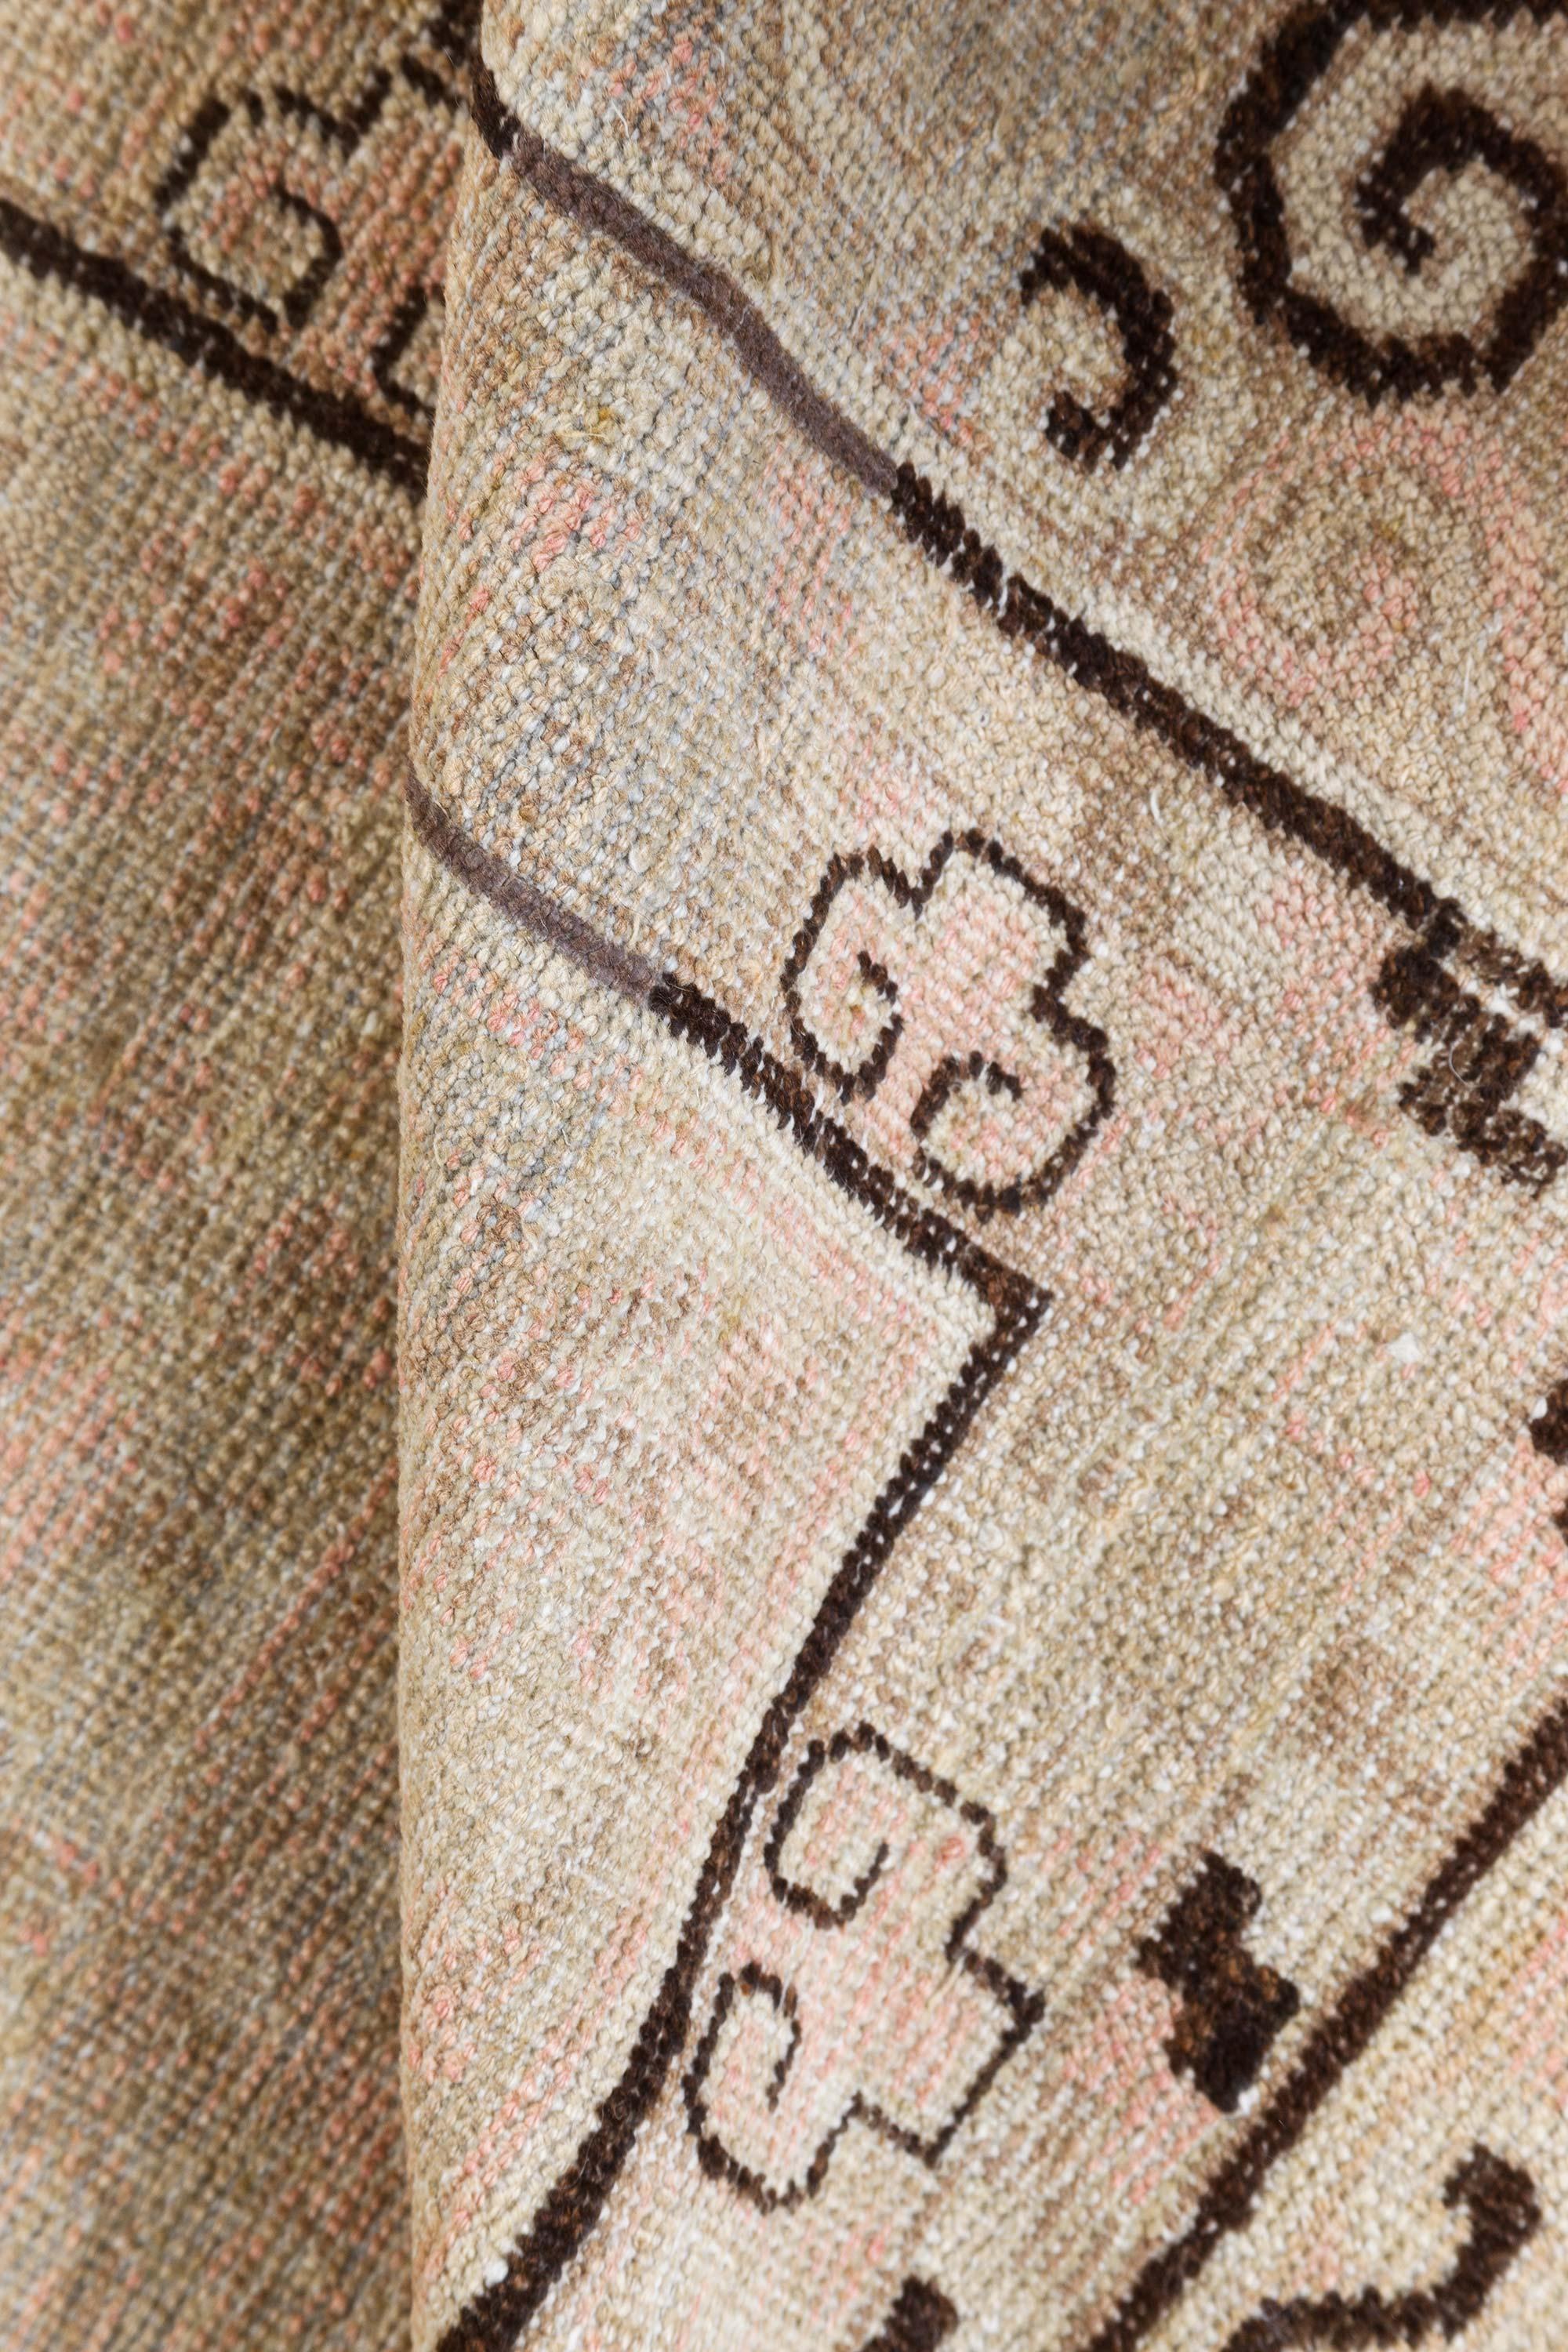 Vintage Samarkand 'Khotan' handmade wool rug.
Size: 5'6